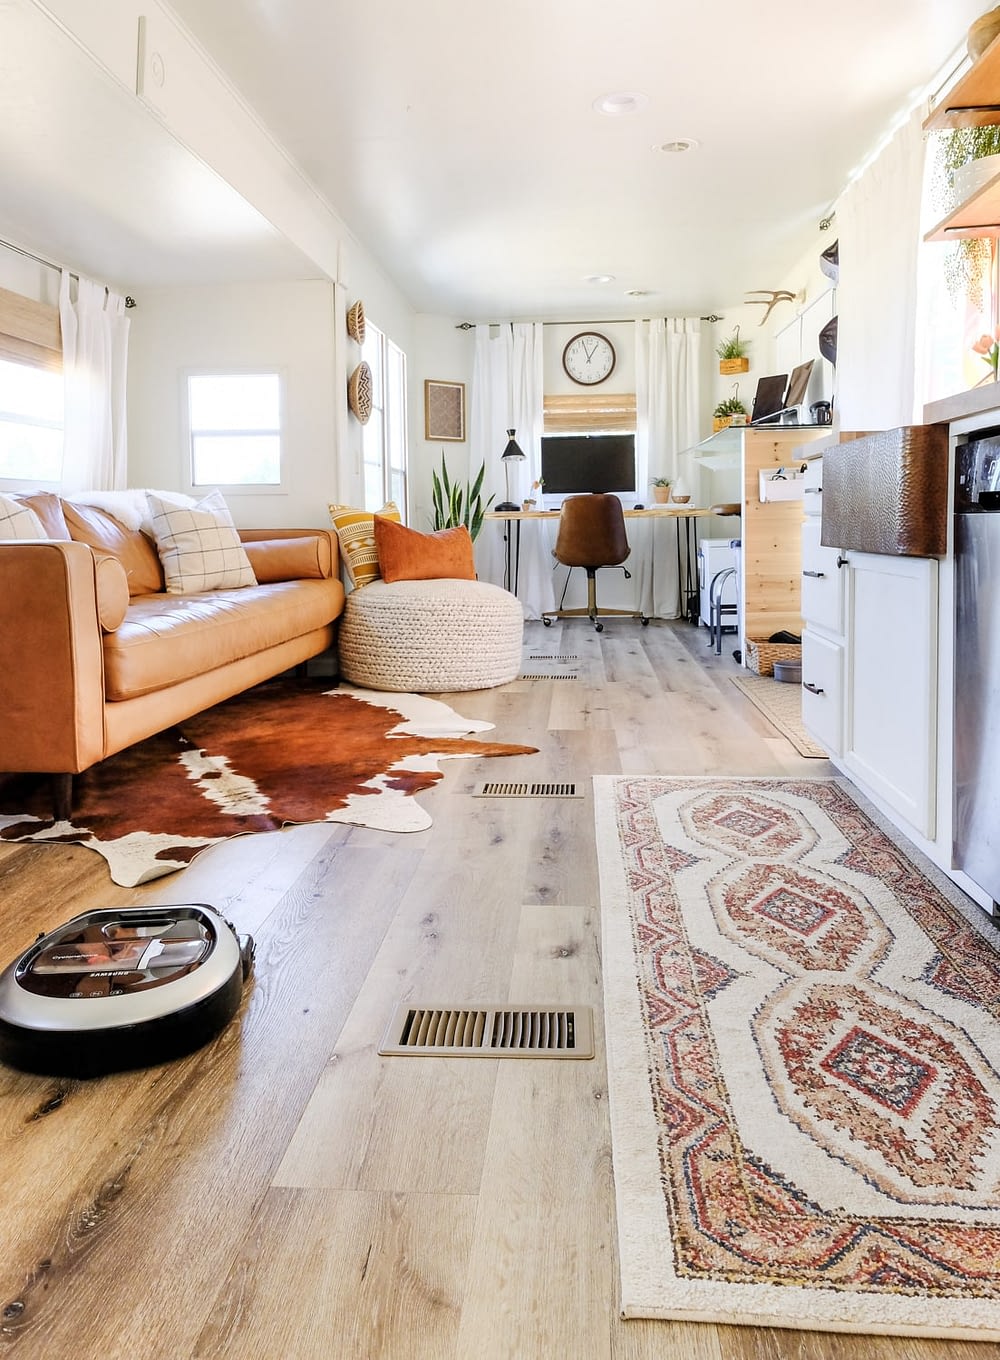 Samsung POWERbot pet plus vacuuming hardwood floors